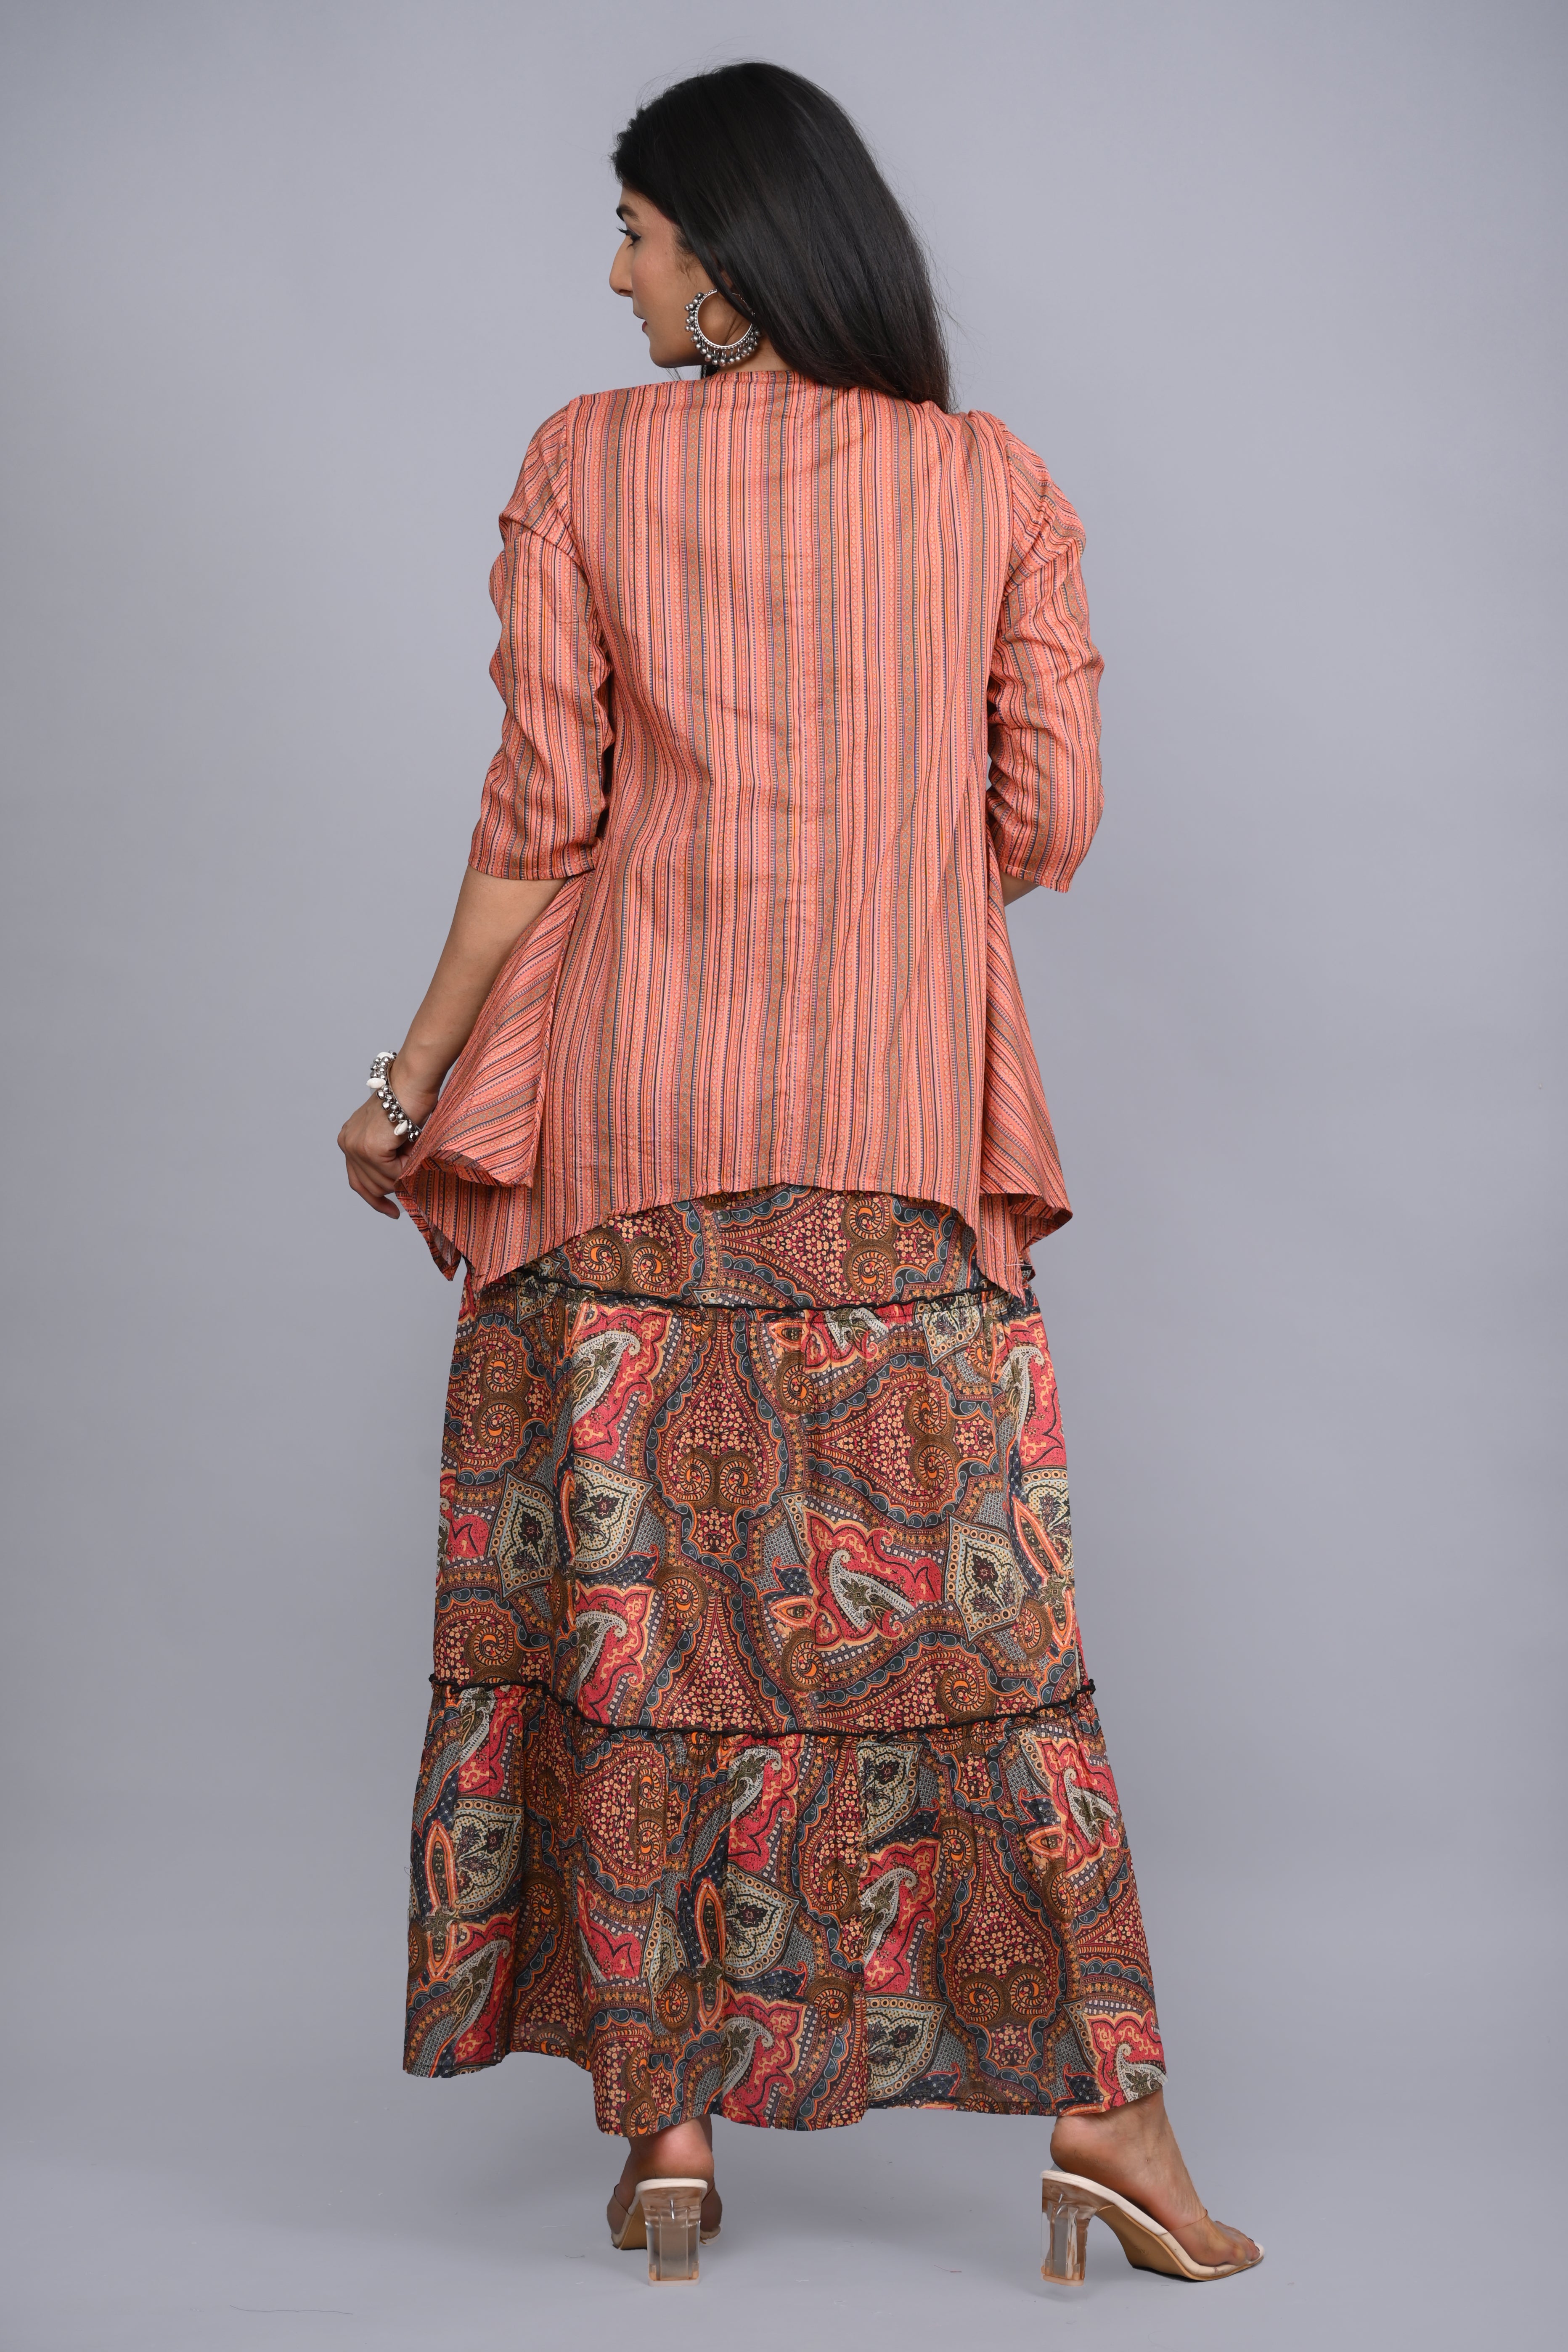 Multi Colored Cotton Ethnic Motif Maxi Dress with Shrug